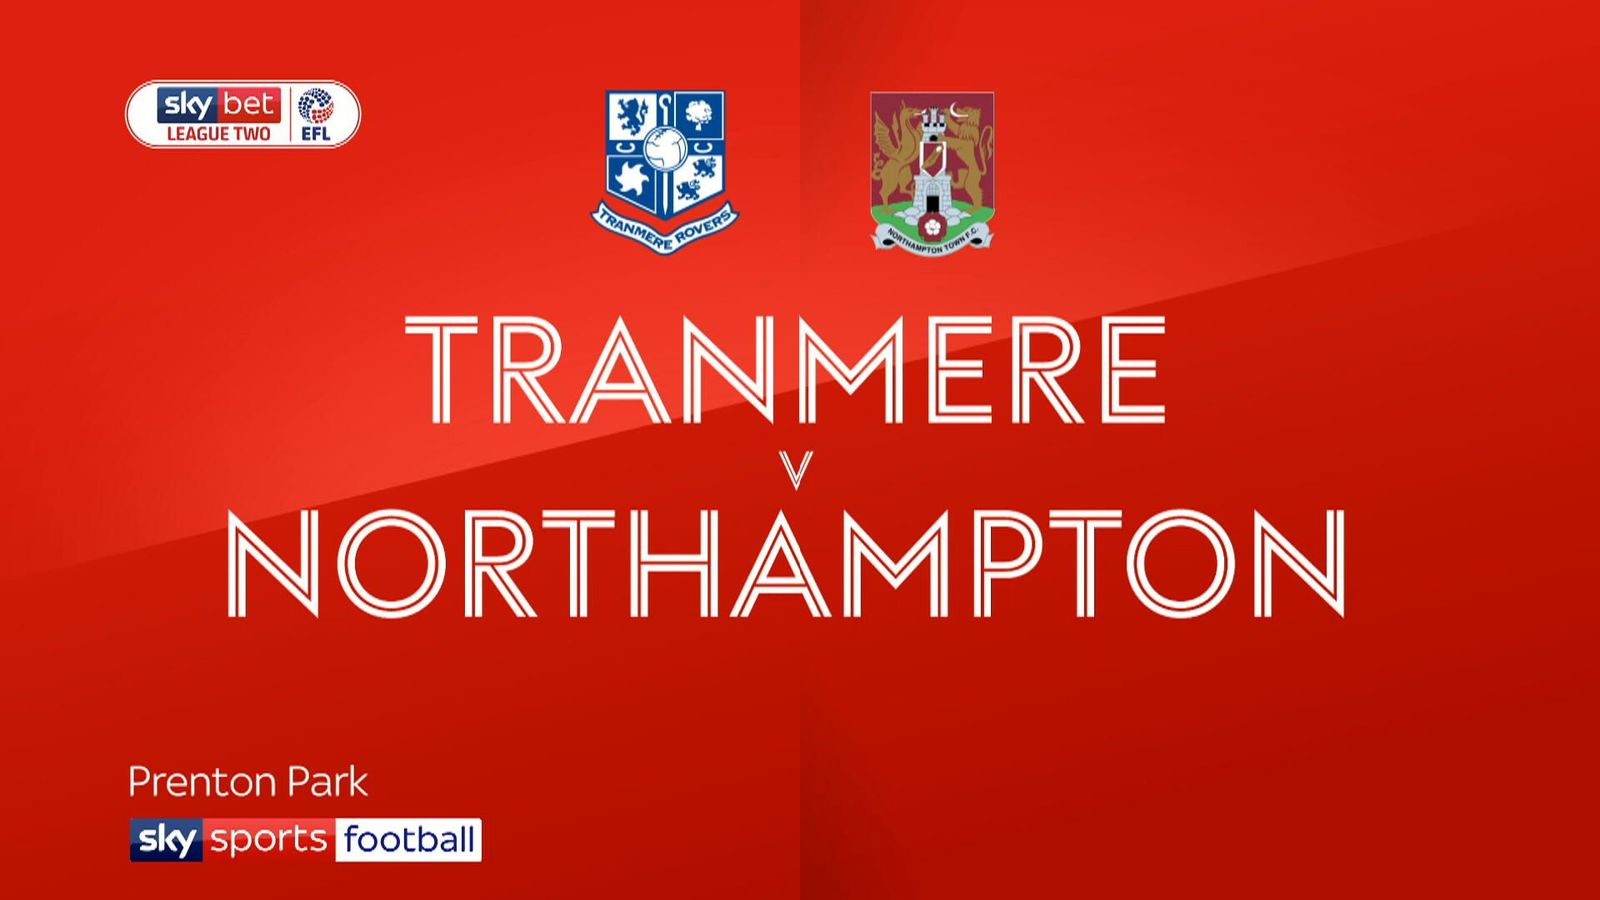 Tranmere 1 - 2 Northampton - Match Report & Highlights